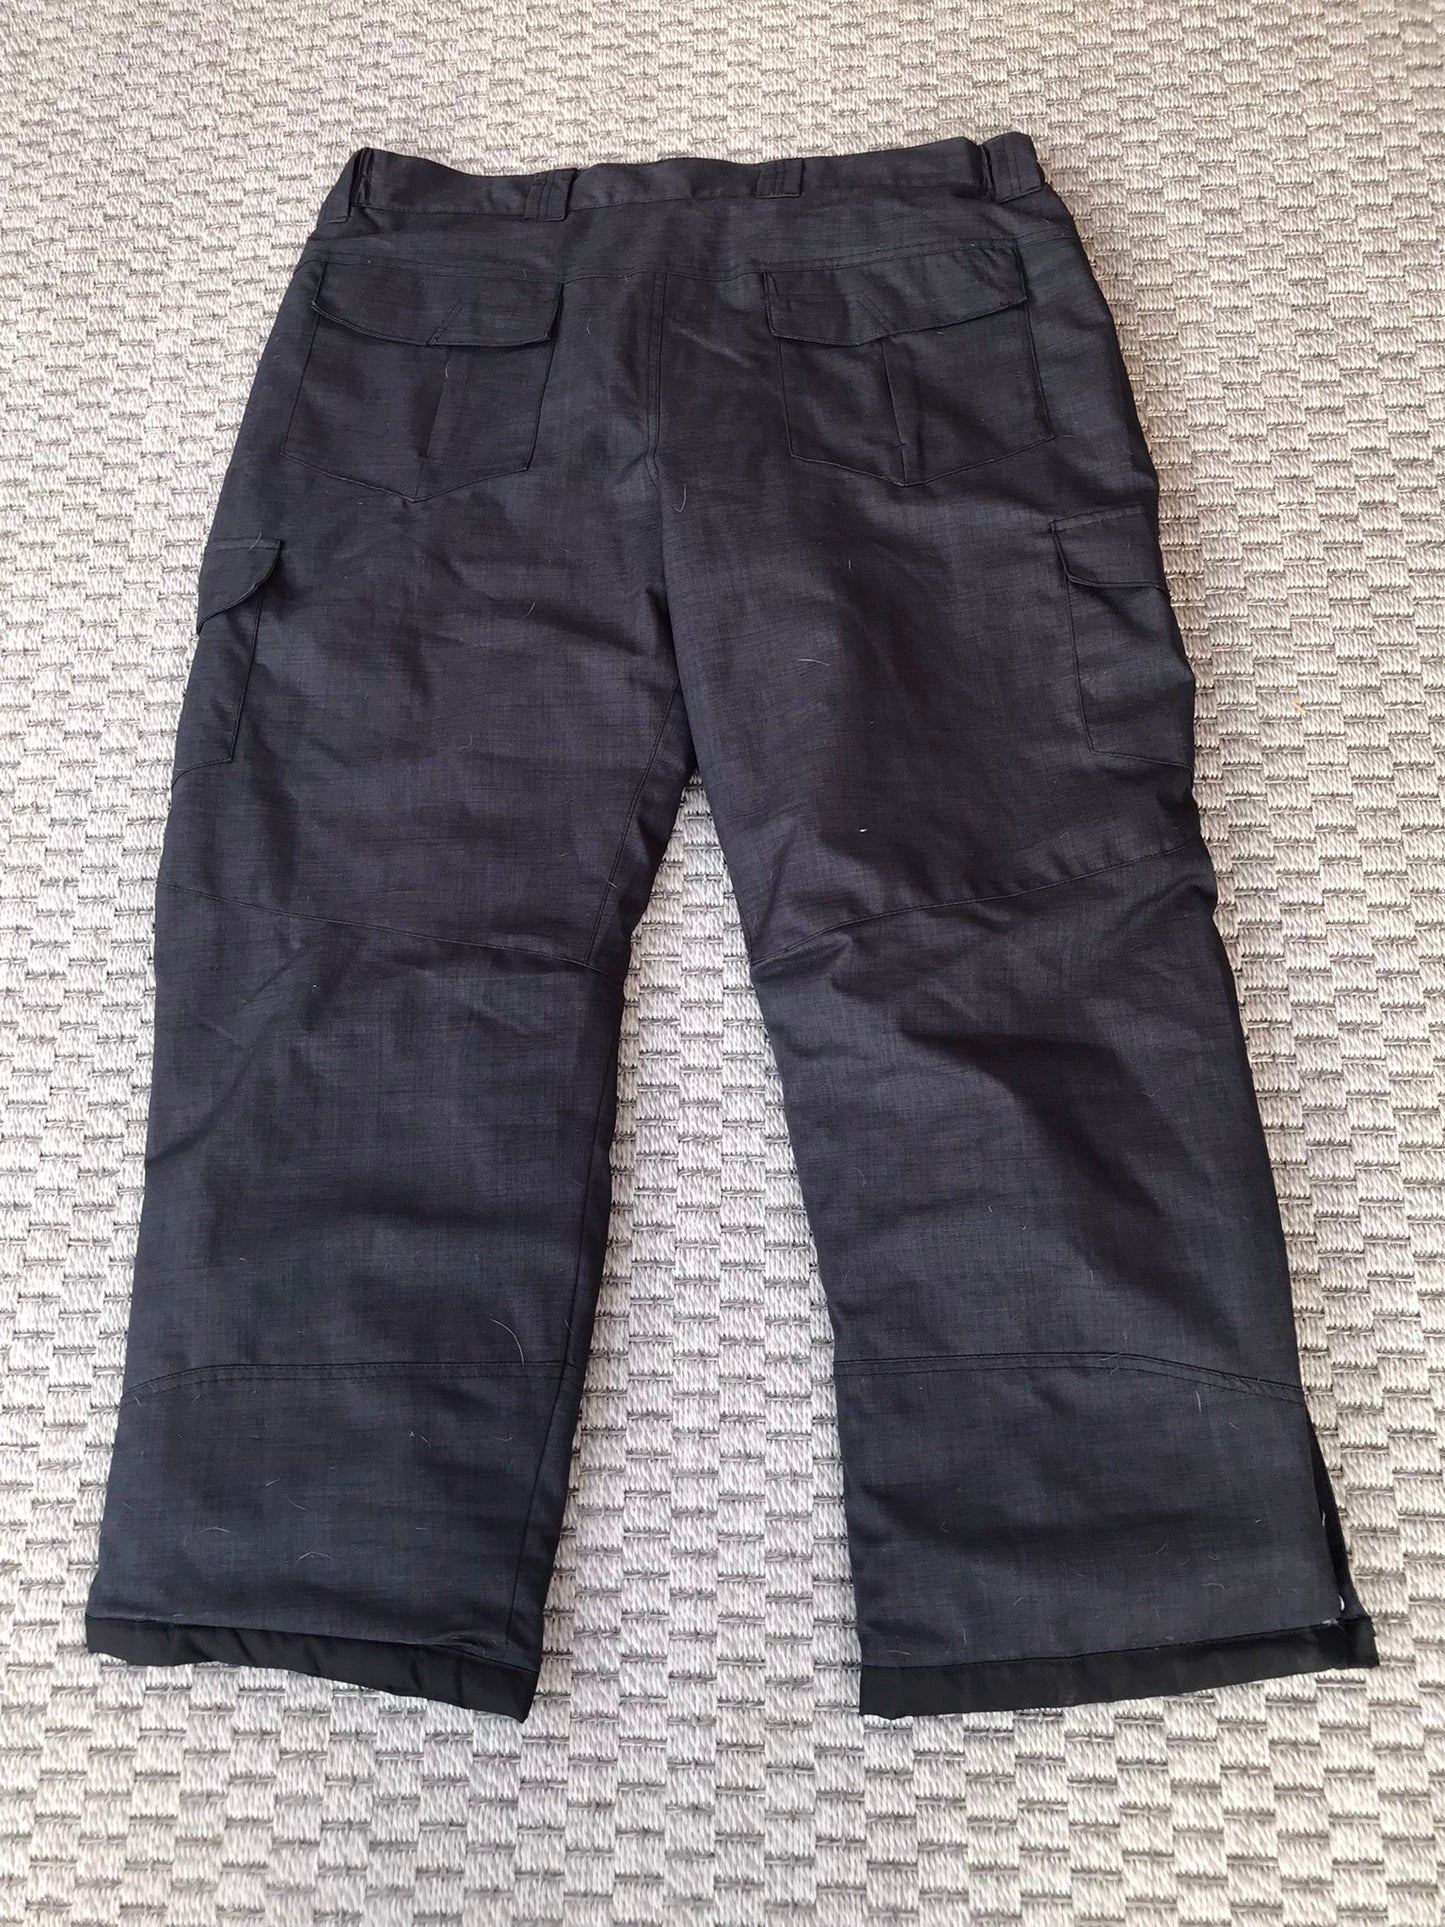 Snow Pants Men's XX-Large Smokey Grey Cargo Pockets Fleece Lined Like New